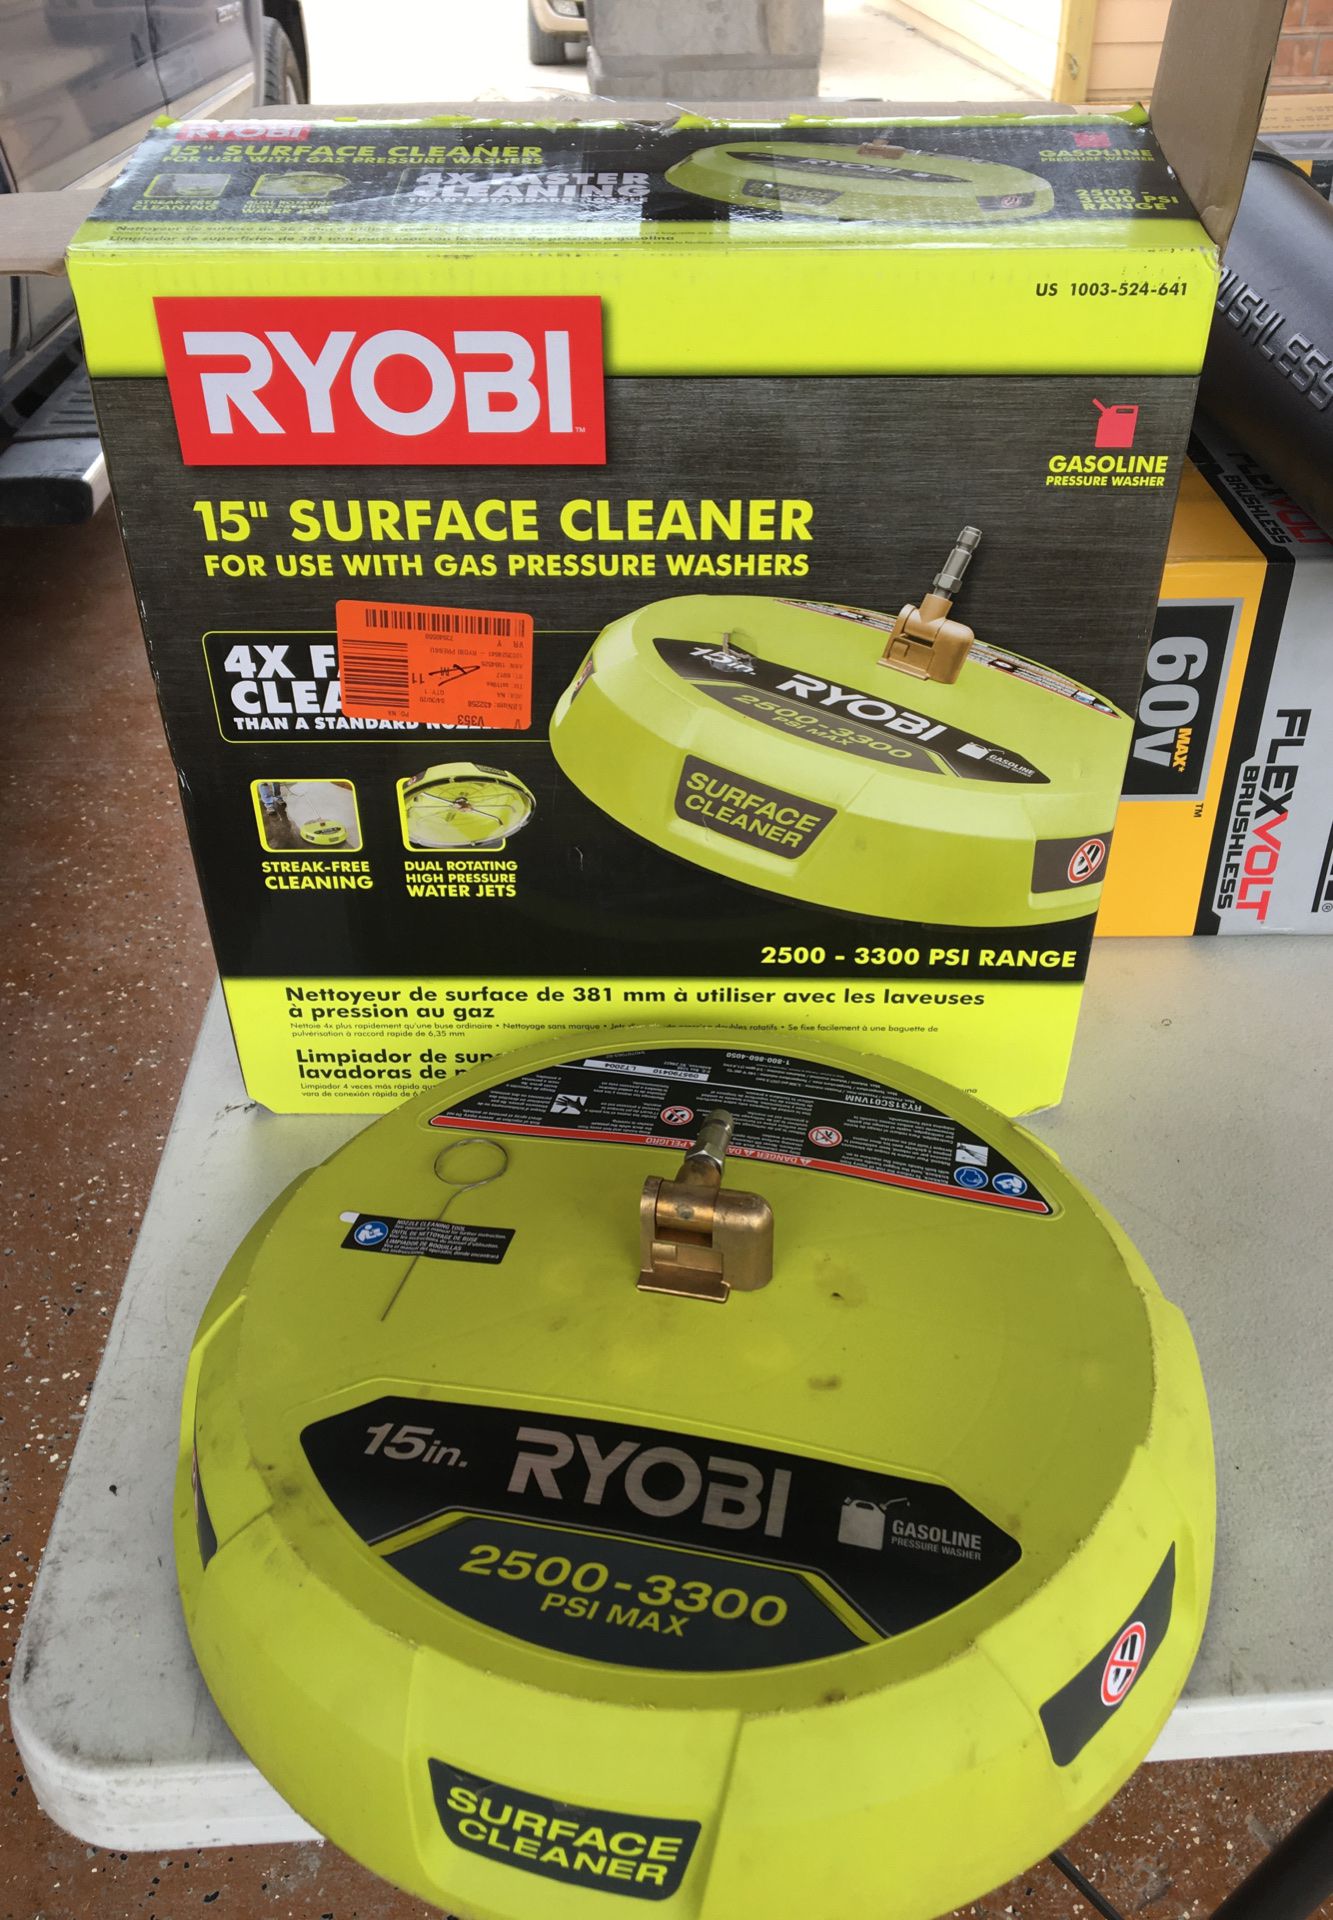 Ryobi 15” Surface cleaner